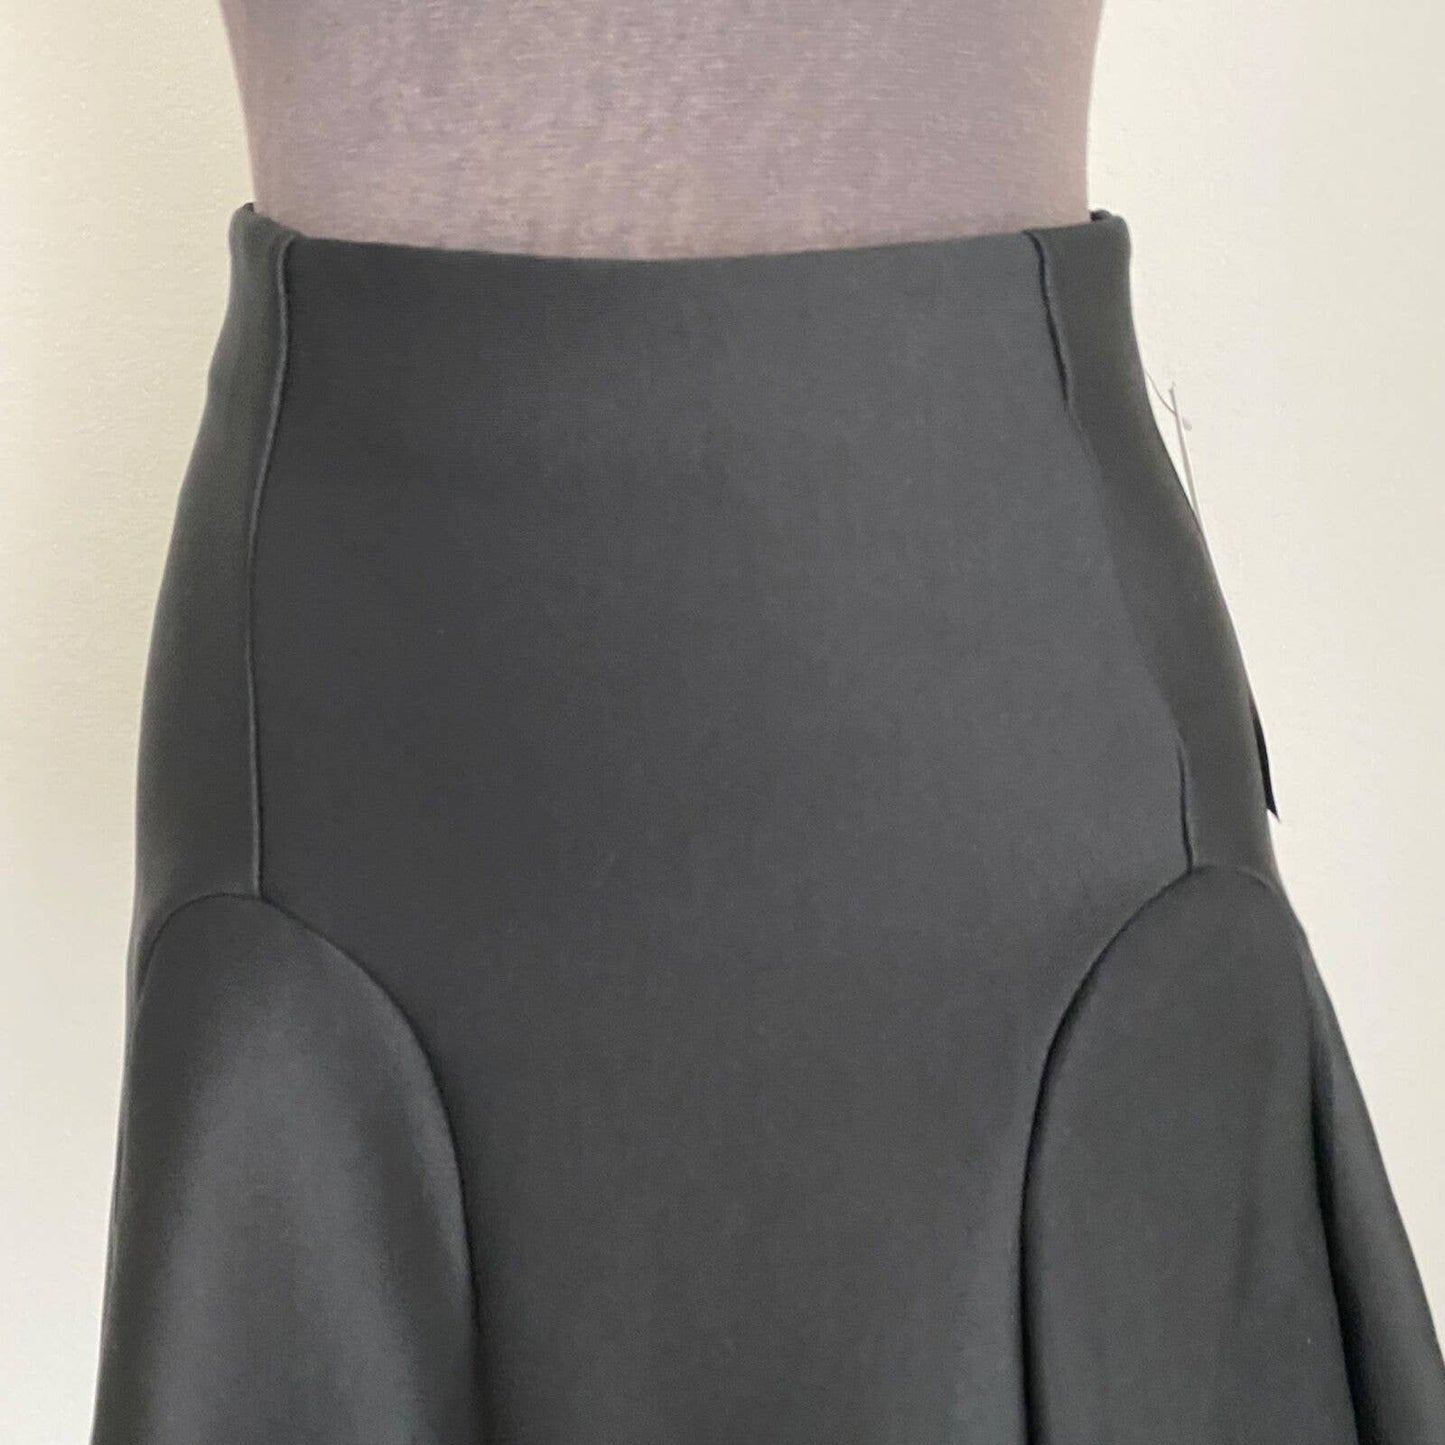 Mossimo sz XS high rise waisted Flare mini skirt NWT